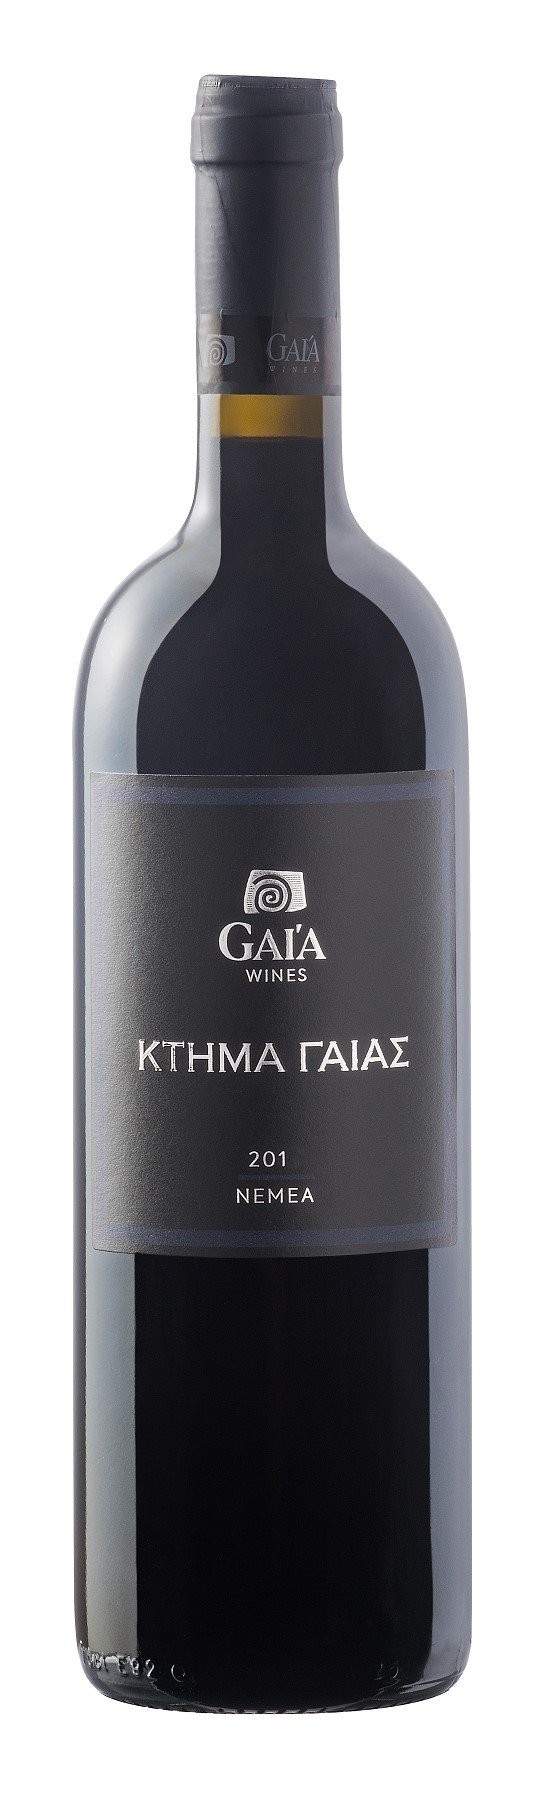 gaia-wines7.jpg